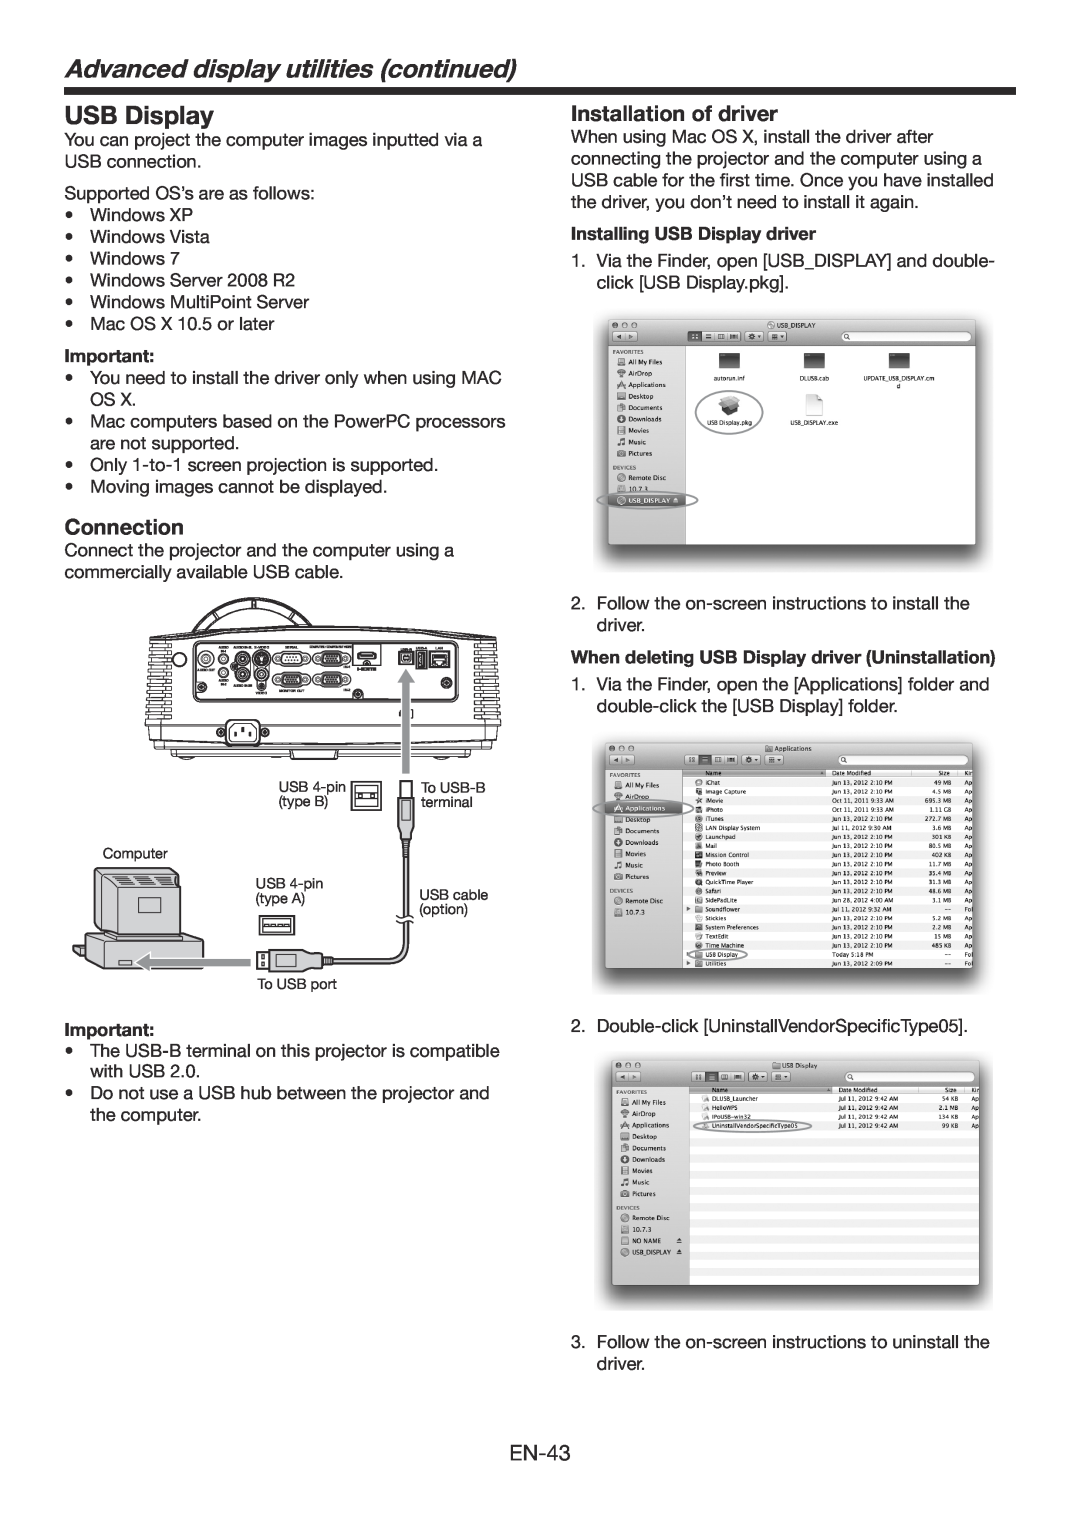 Mitsubishi Electronics WD390U-EST USB Display, Installation of driver, Advanced display utilities continued, Connection 